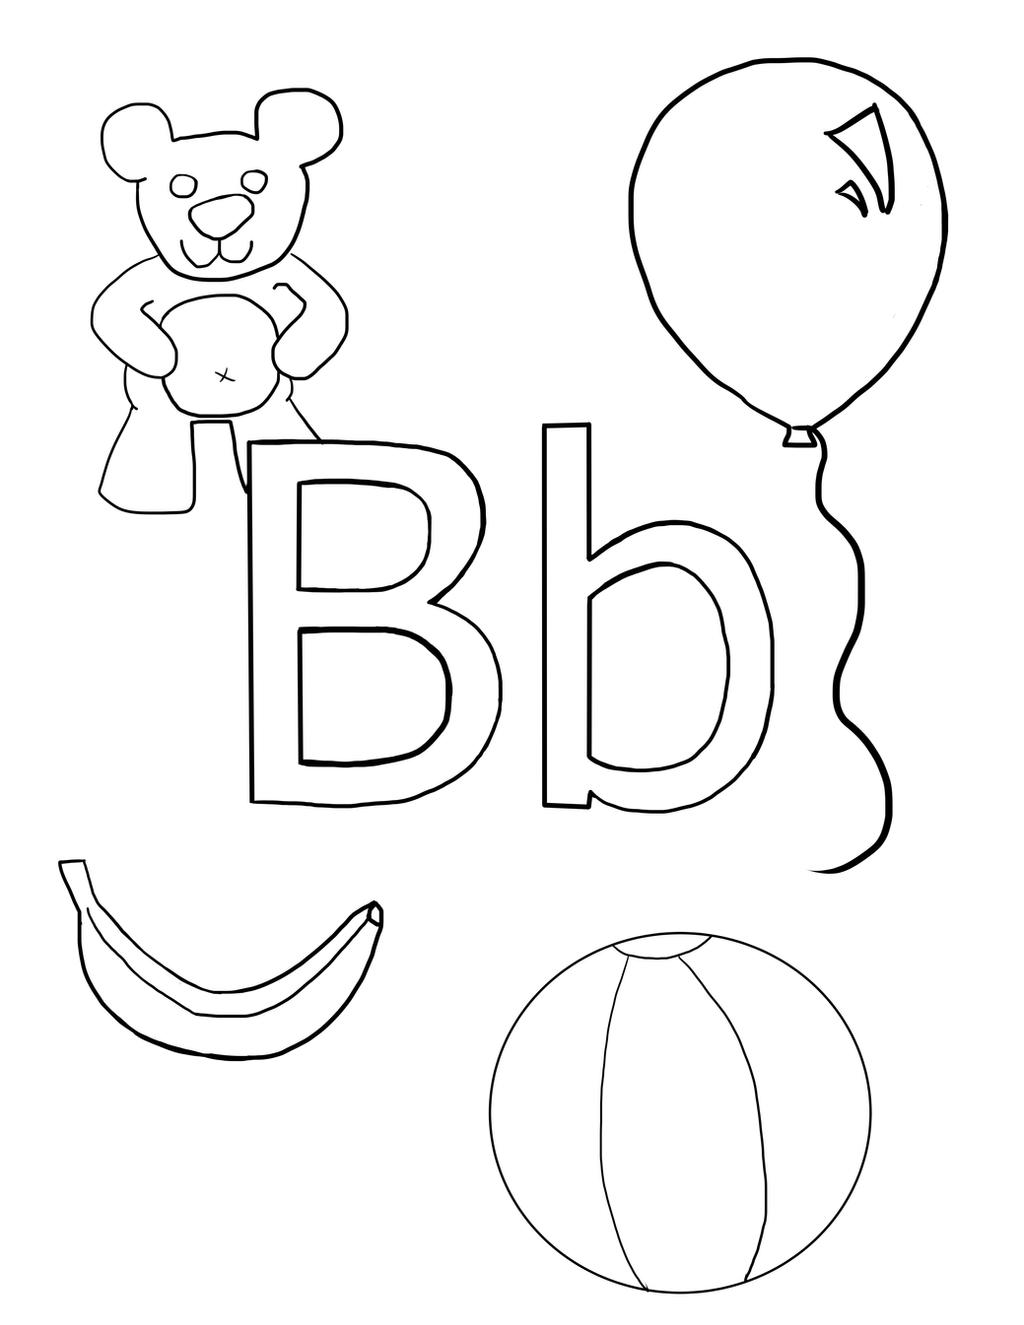 Letter B coloring sheet by AudioBot11 on DeviantArt